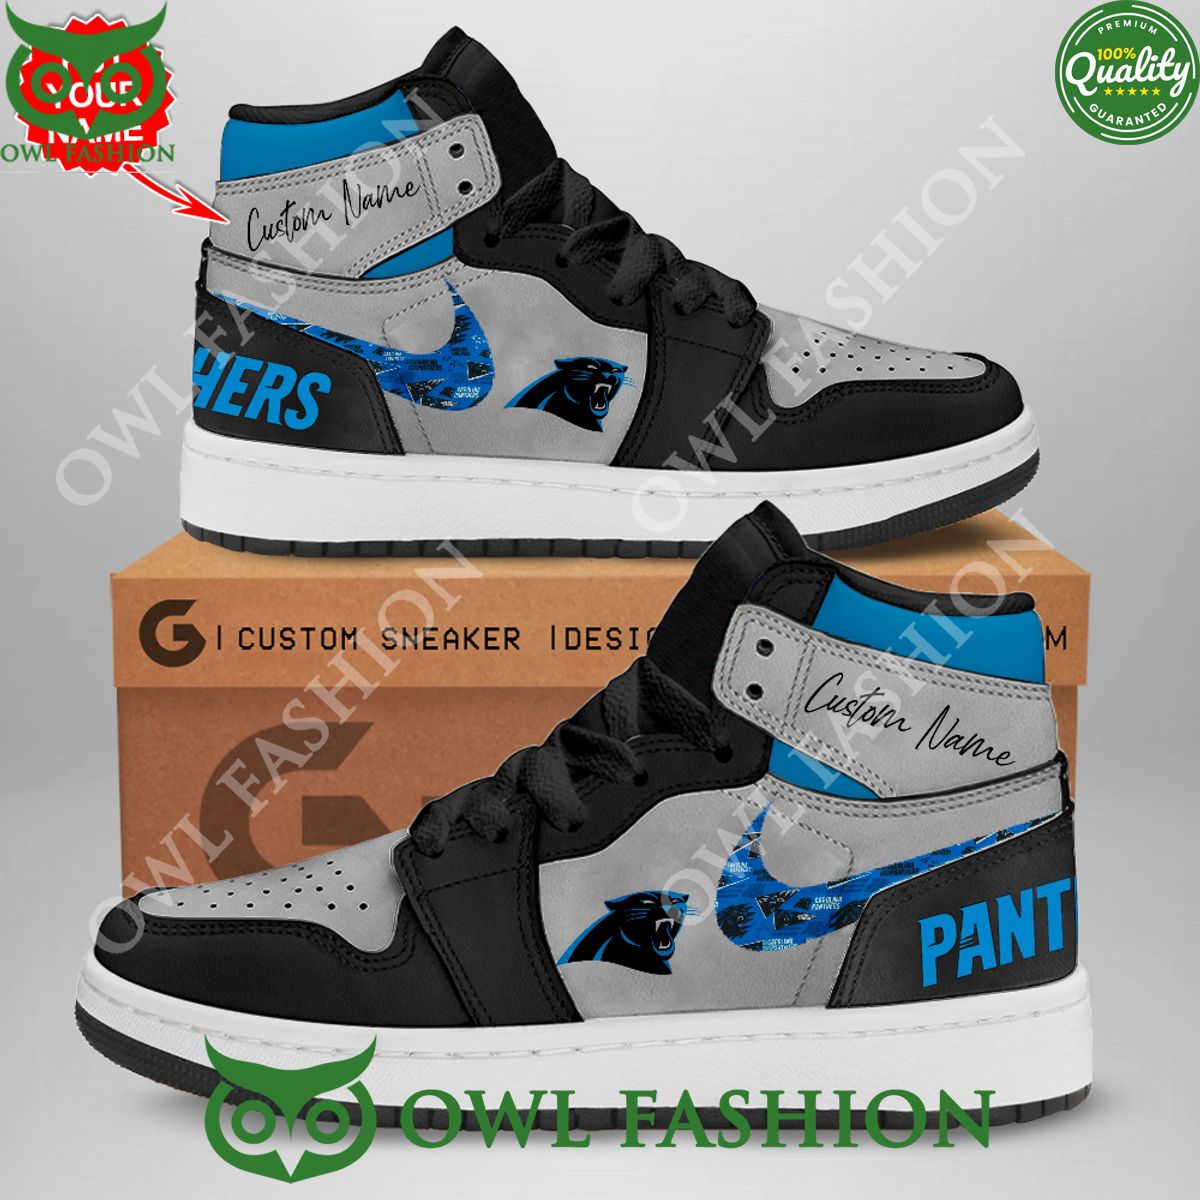 carolina panthers nfl personalized air jordan sneakers 1 hJvap.jpg